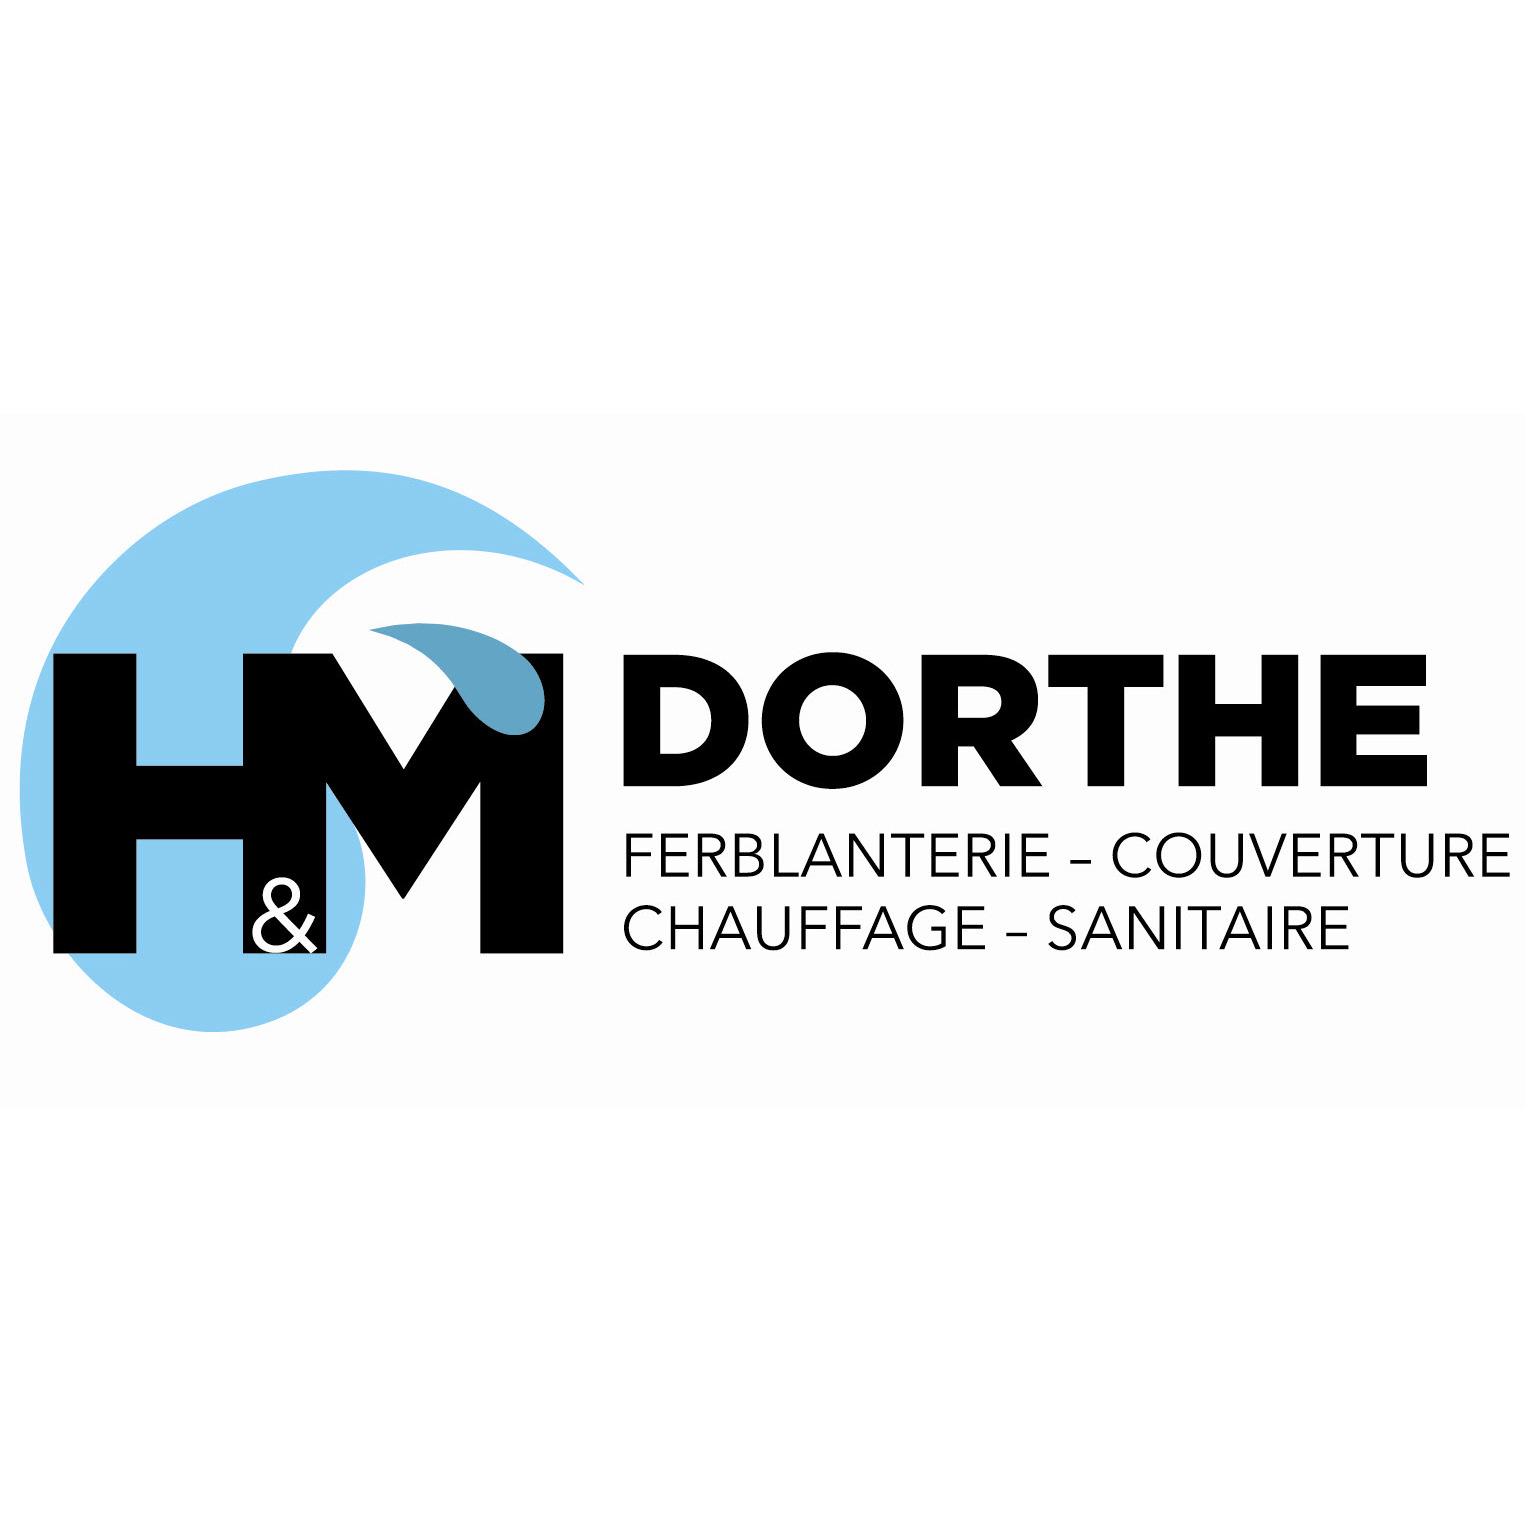 H & M Dorthe Sàrl Logo